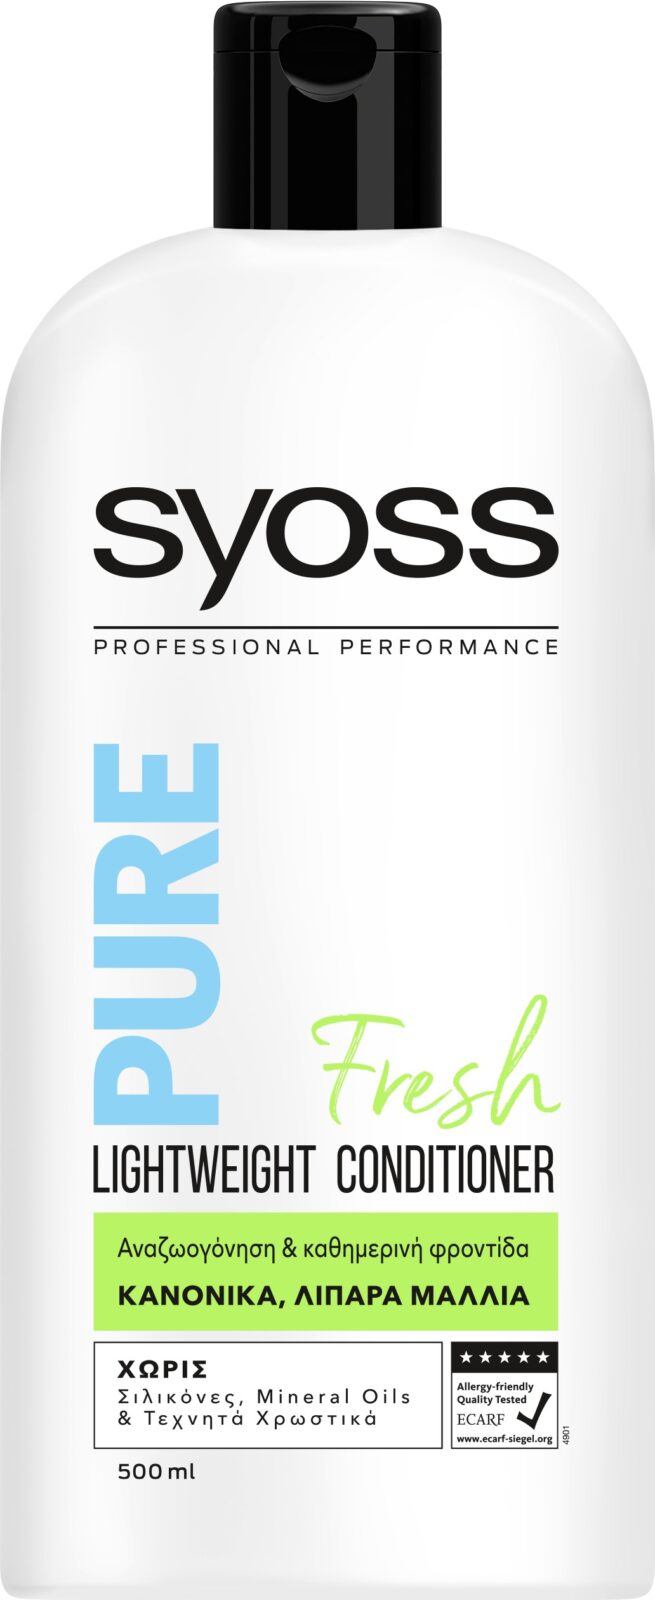 Syoss Pure Fresh Conditioner